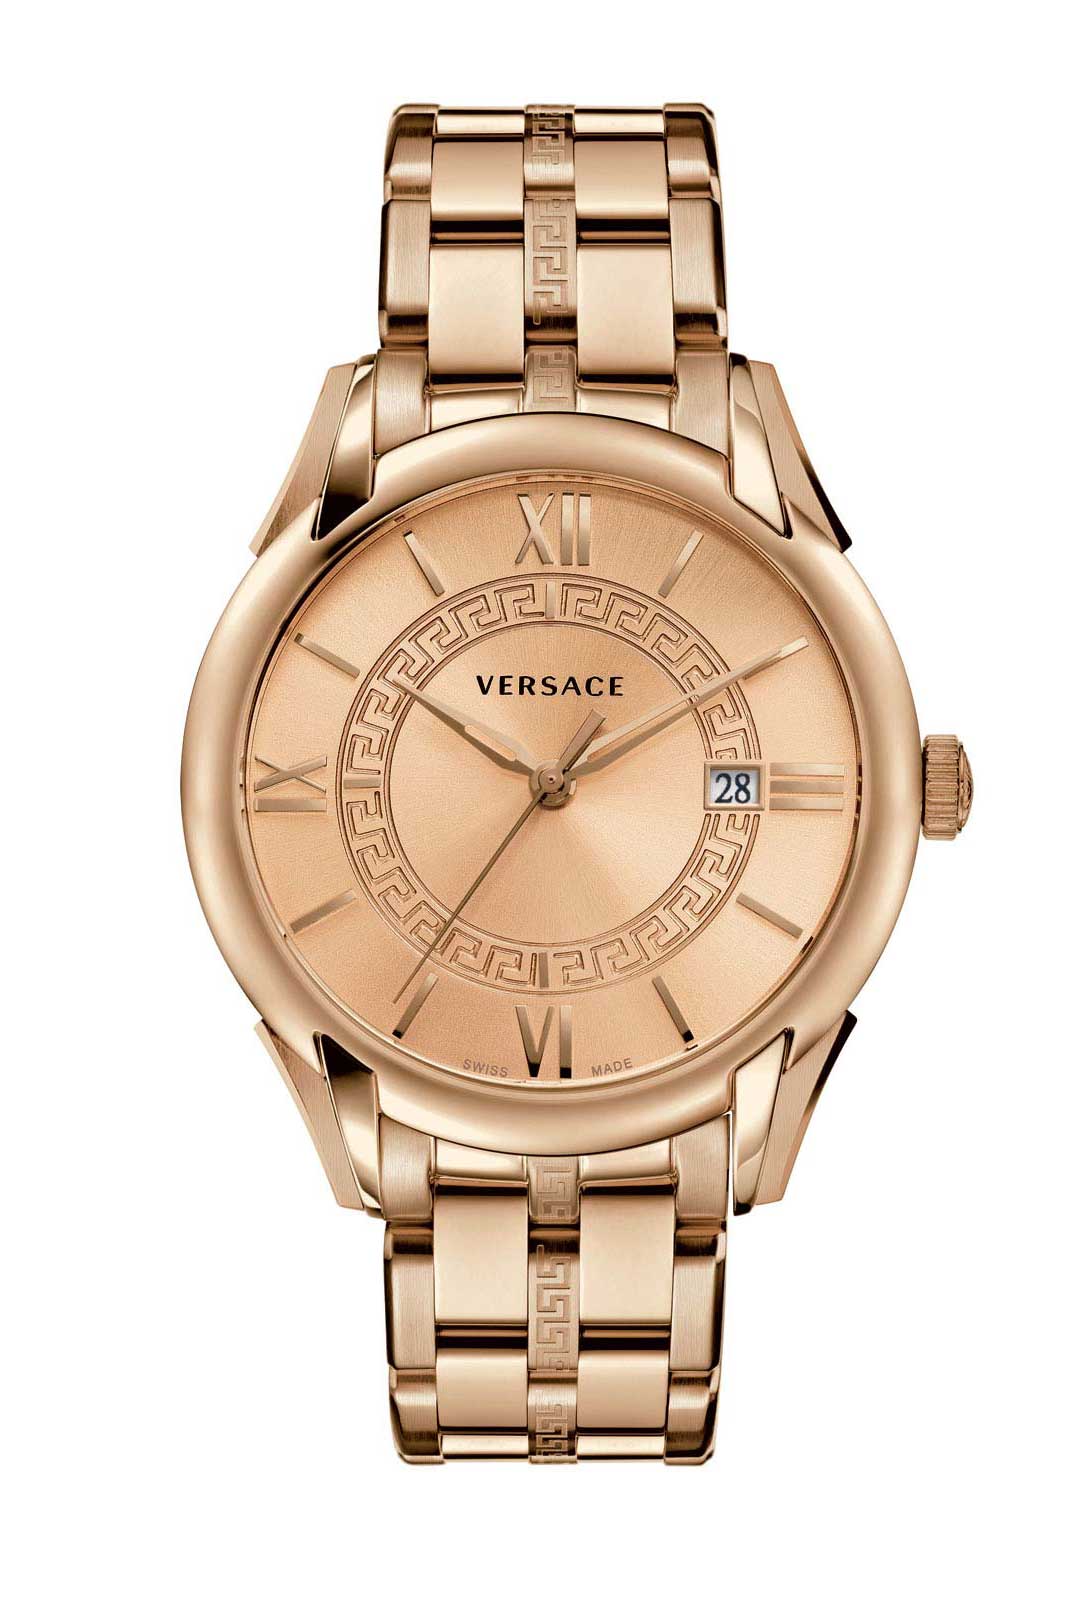 Versace QUARTZ 3 HANDS watch 715.2 GOLDEN SUNRAY DIAL